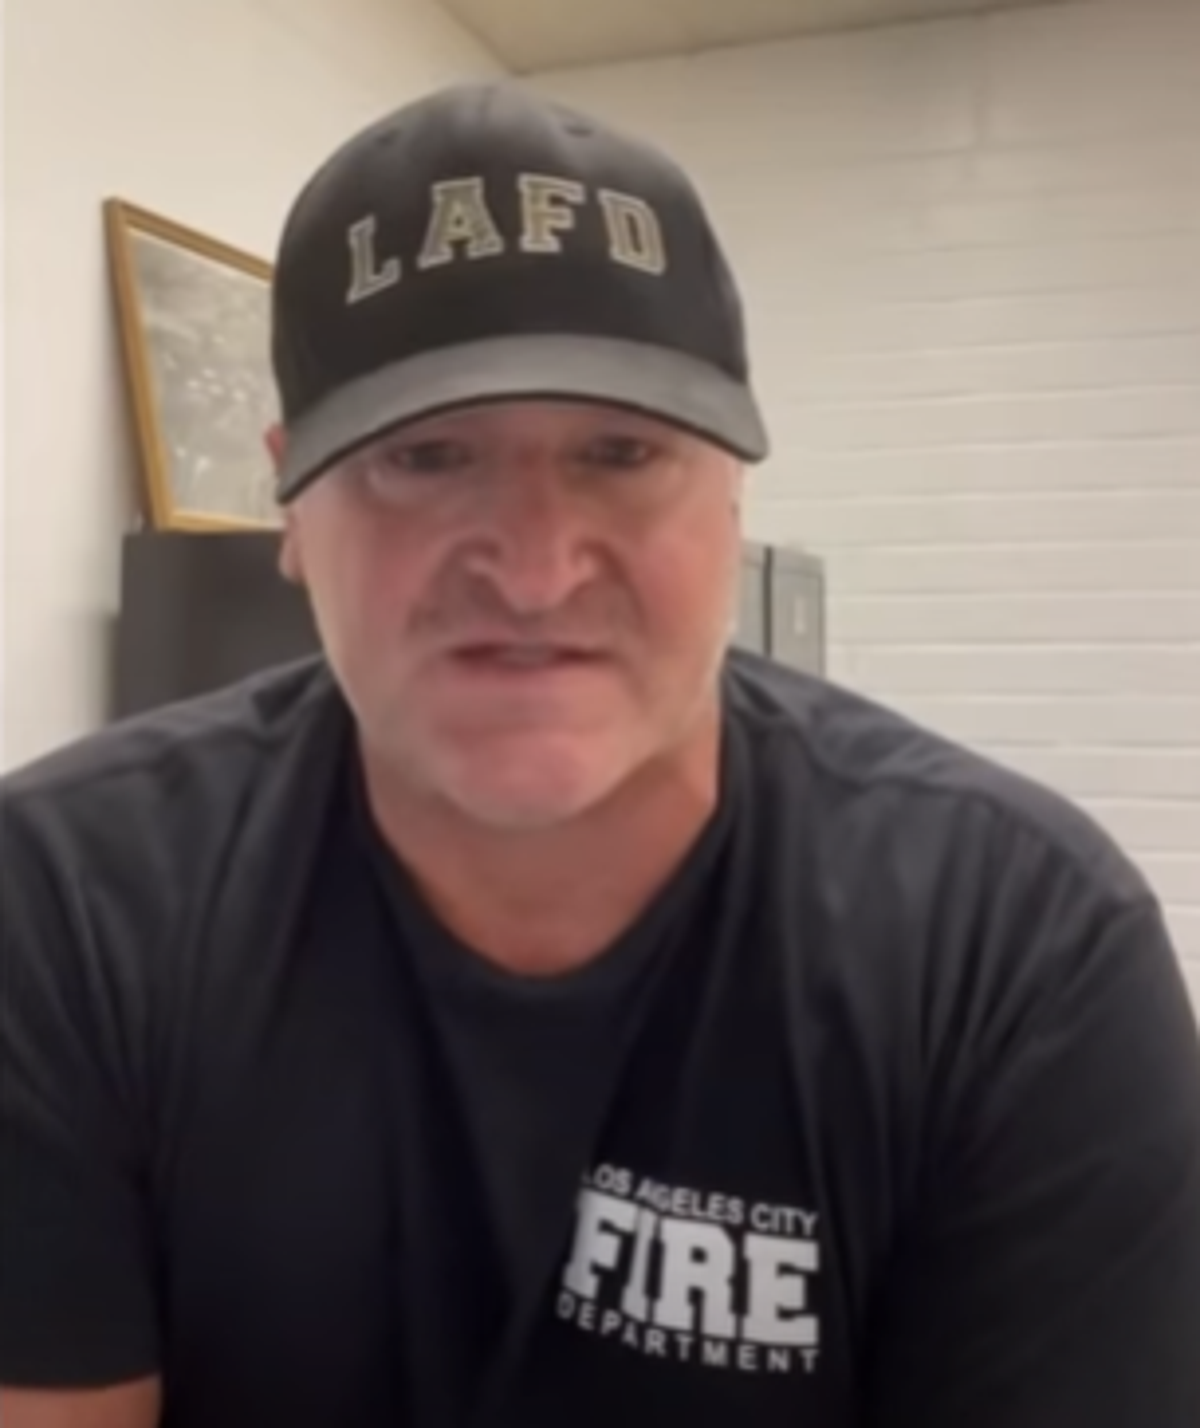 LAFD fire captain under investigation for online rant against vaccine mandates